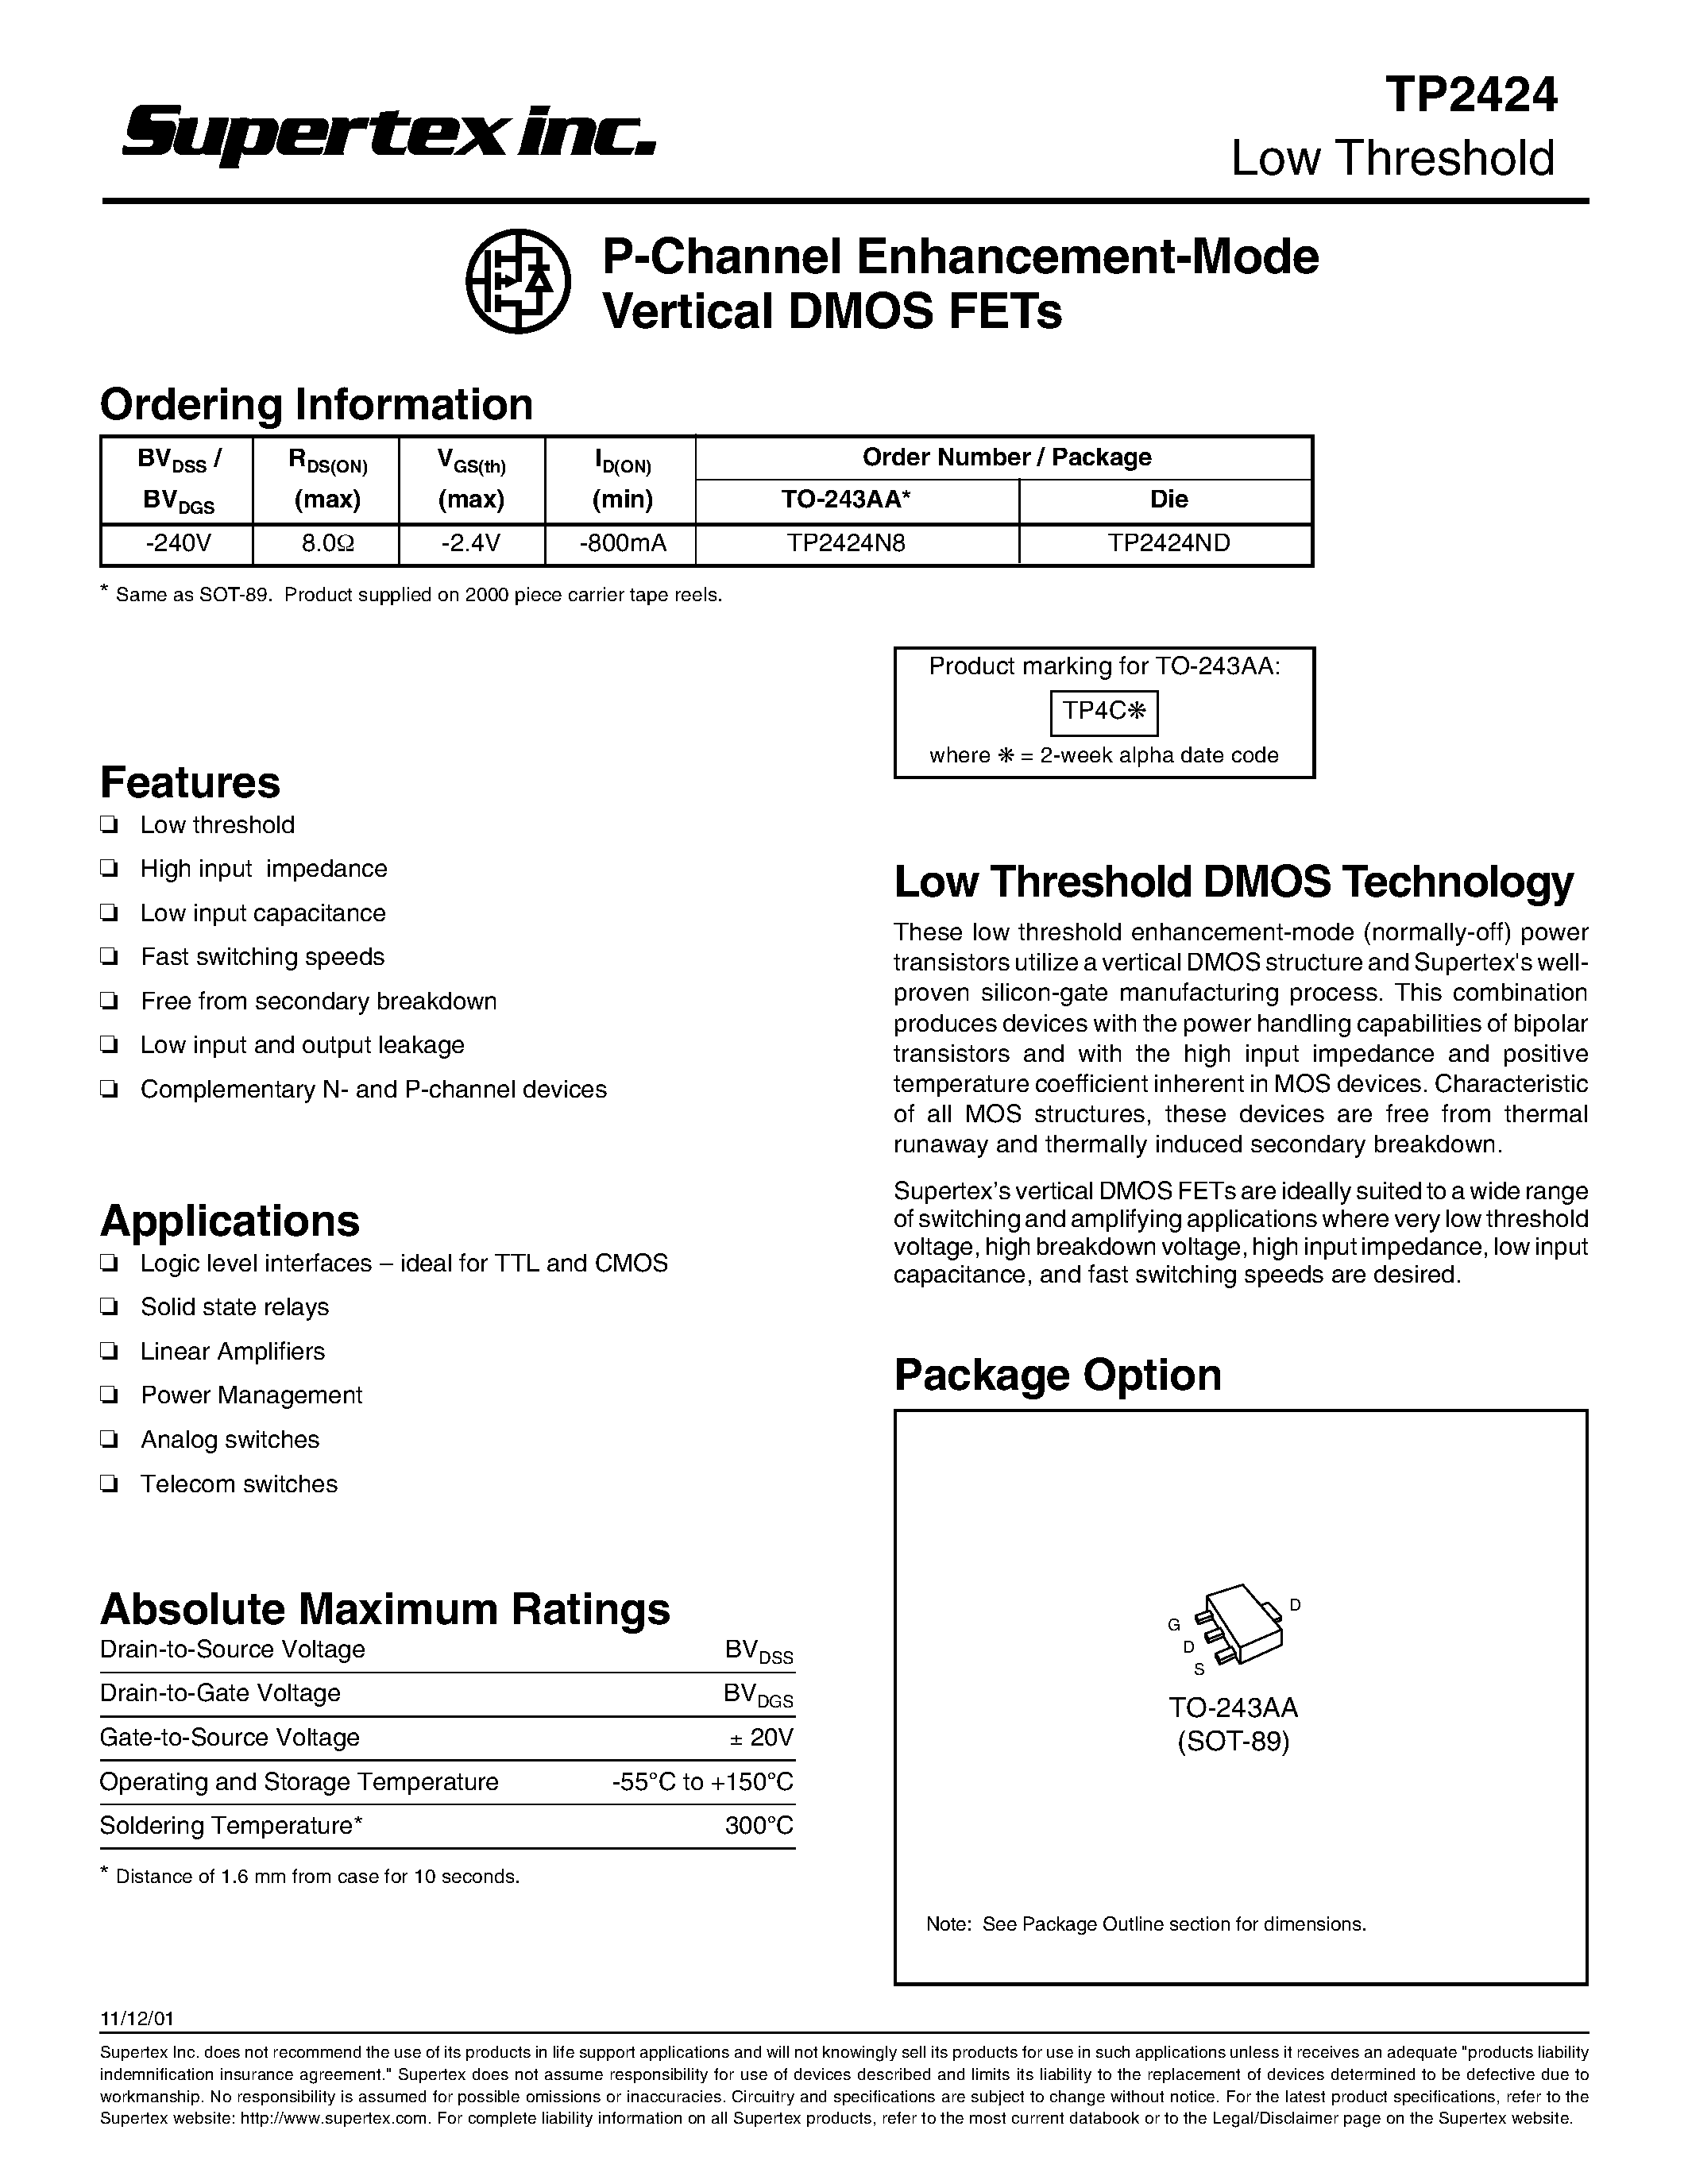 Datasheet TP2424ND - P-Channel Enhancement-Mode Vertical DMOS FETs page 1